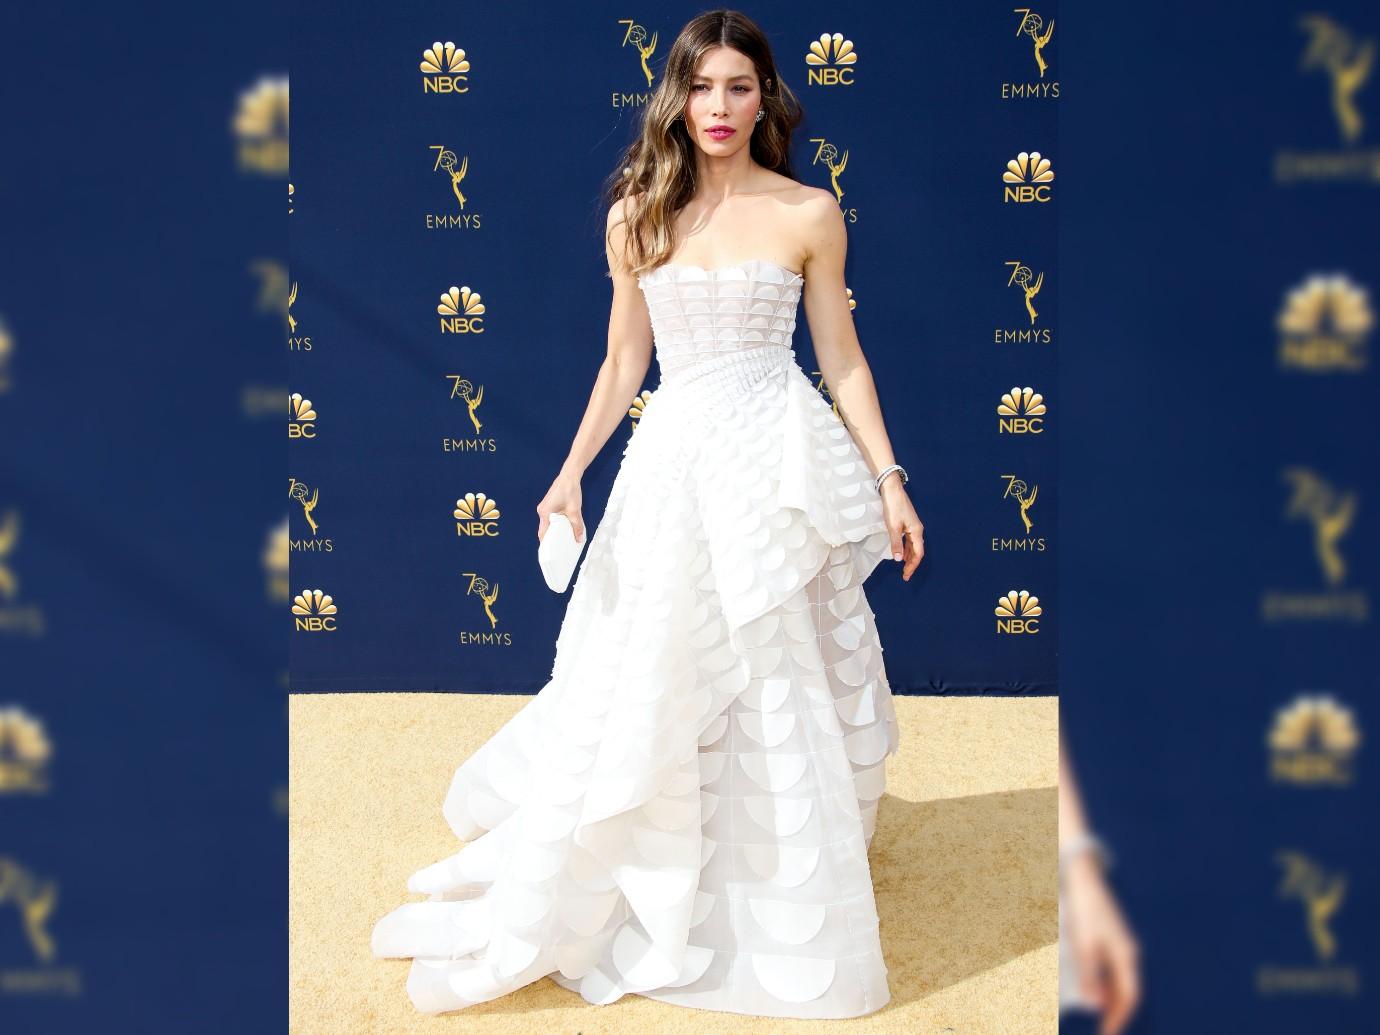 Julia Louis-Dreyfus Navy Blue Mermaid Evening Dress 2020 Oscars